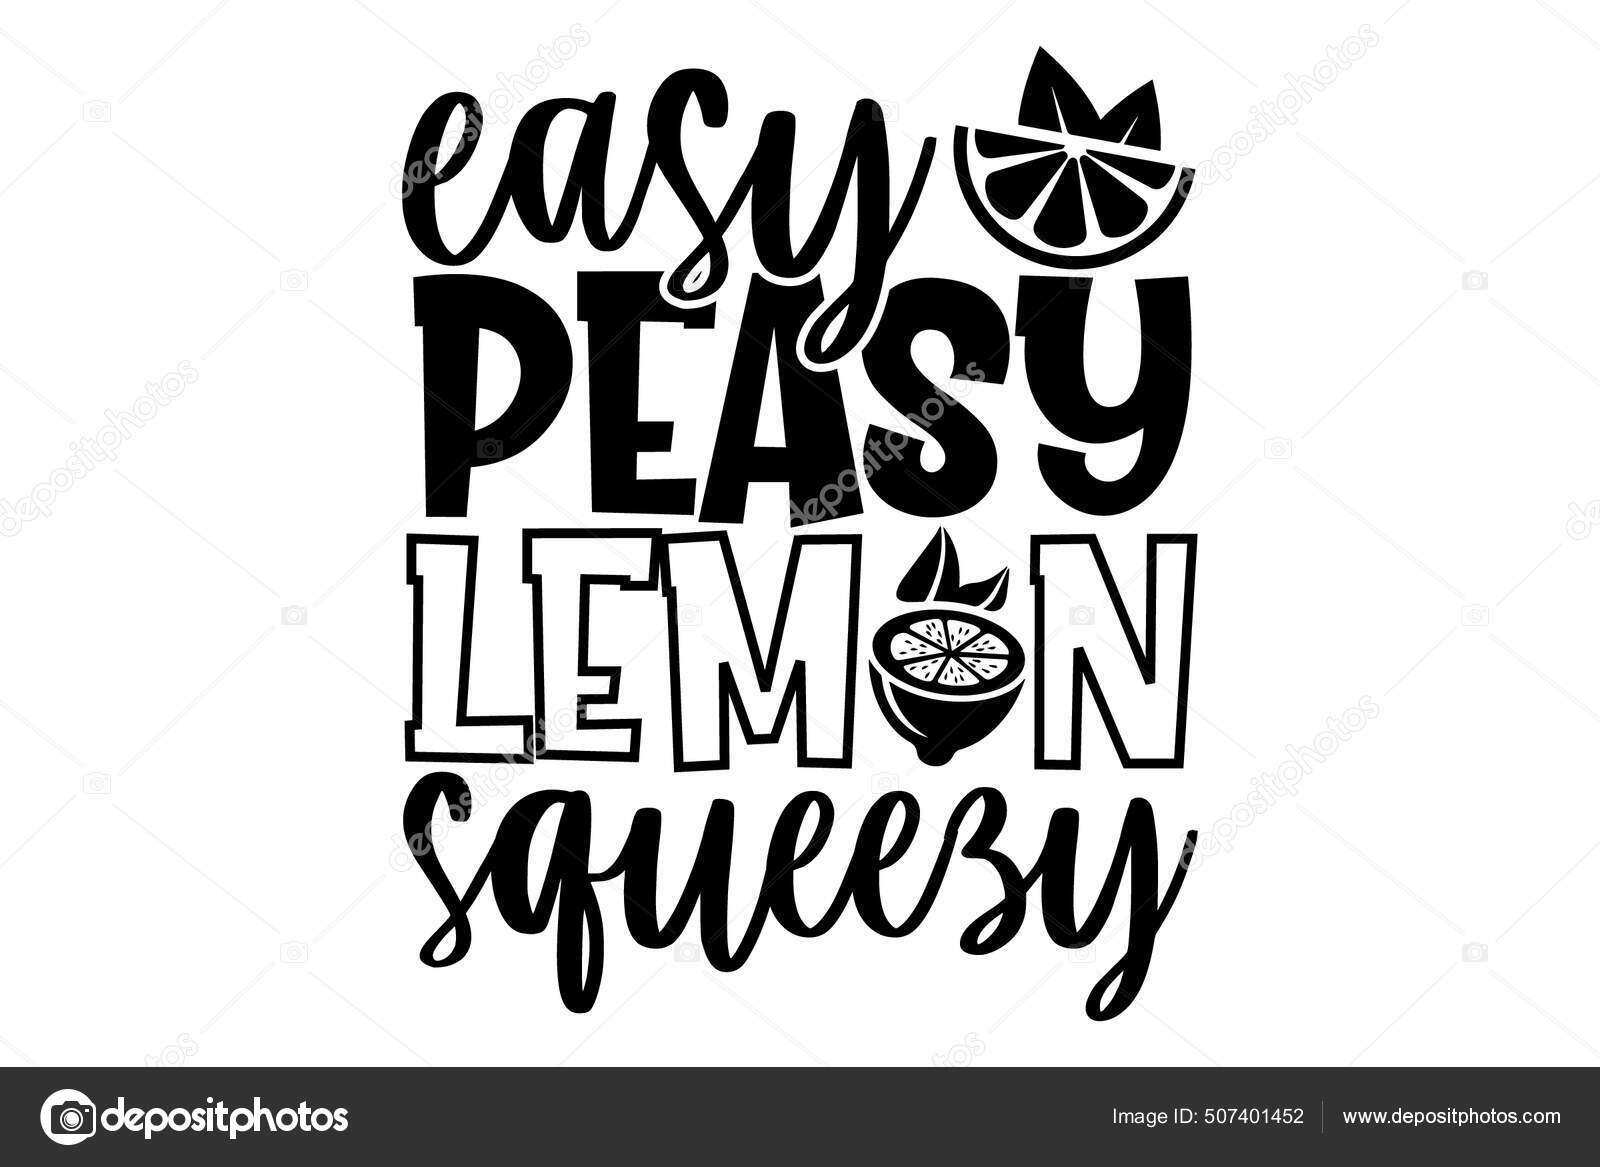 Peasy meaning easy easy peasy